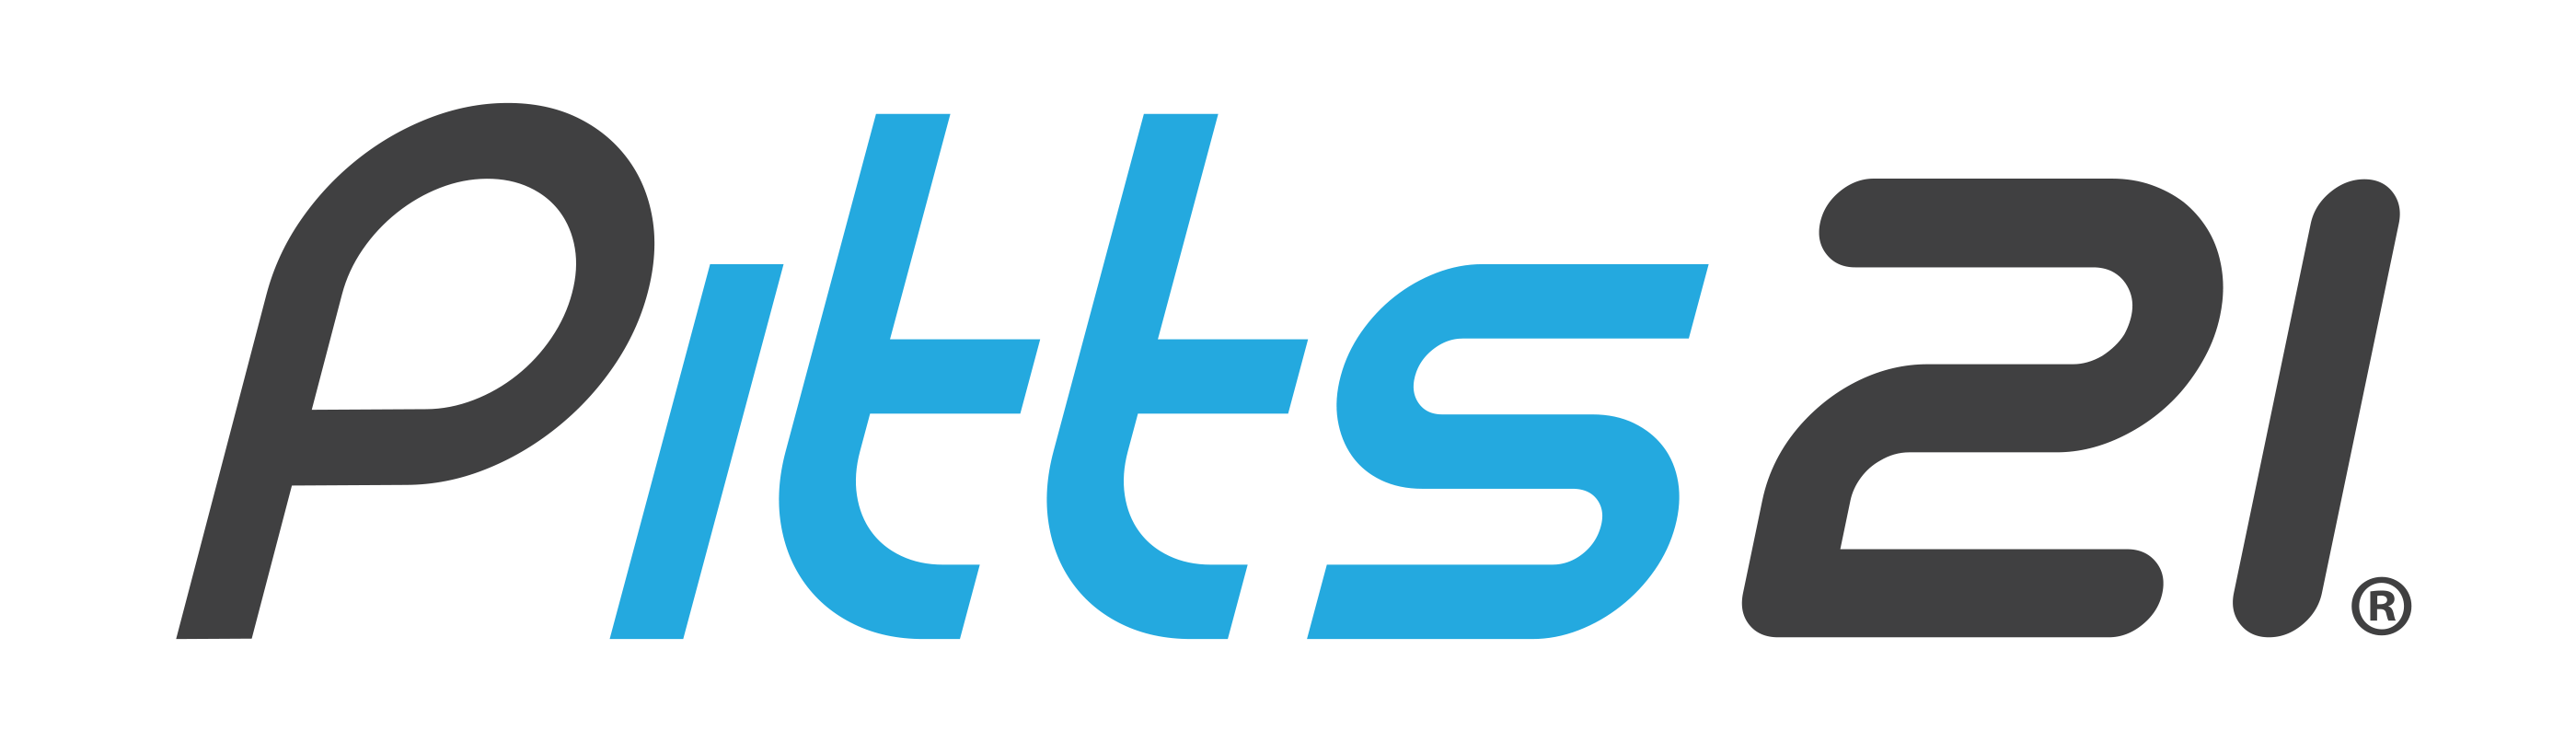 Pitts 21 Logo